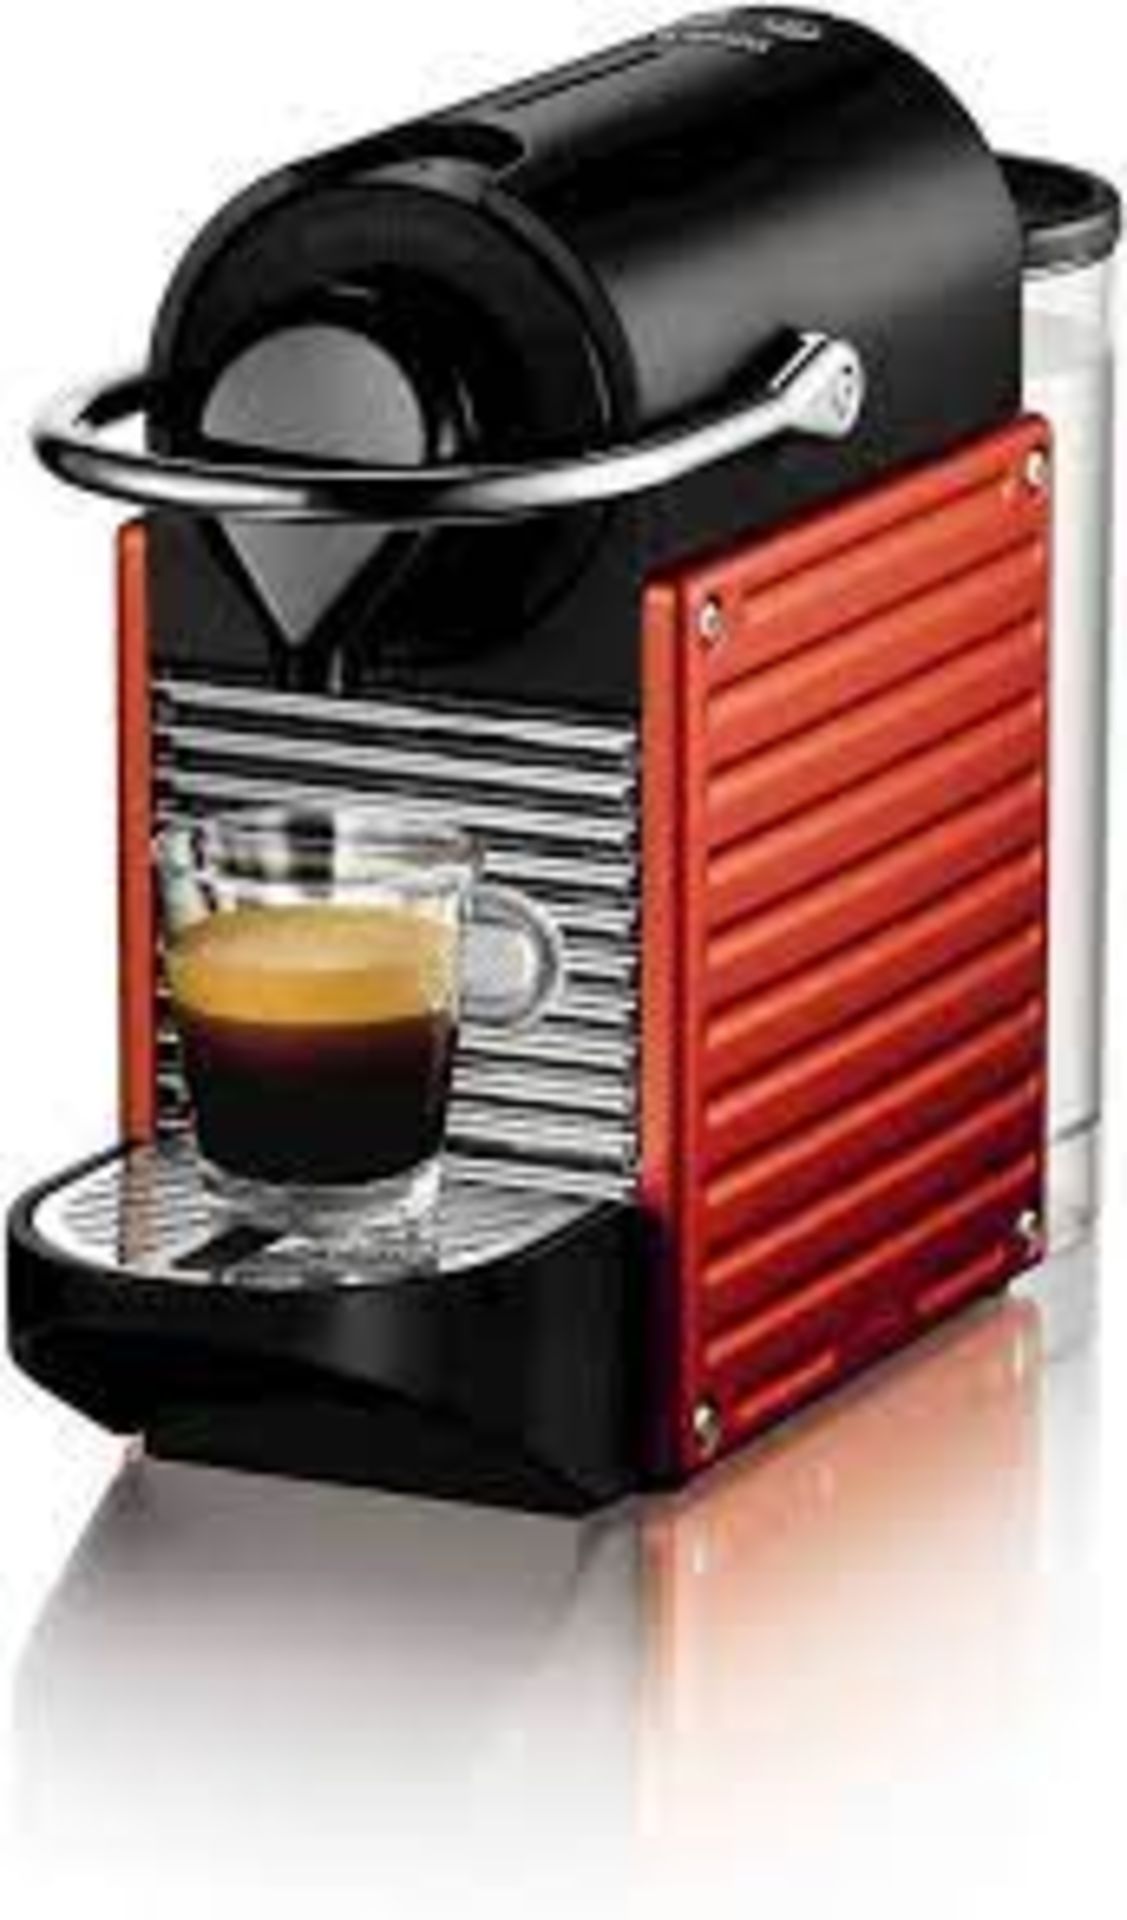 Nespresso Pixie Coffee Machine, Electric (LOCATION P6) - Image 2 of 2